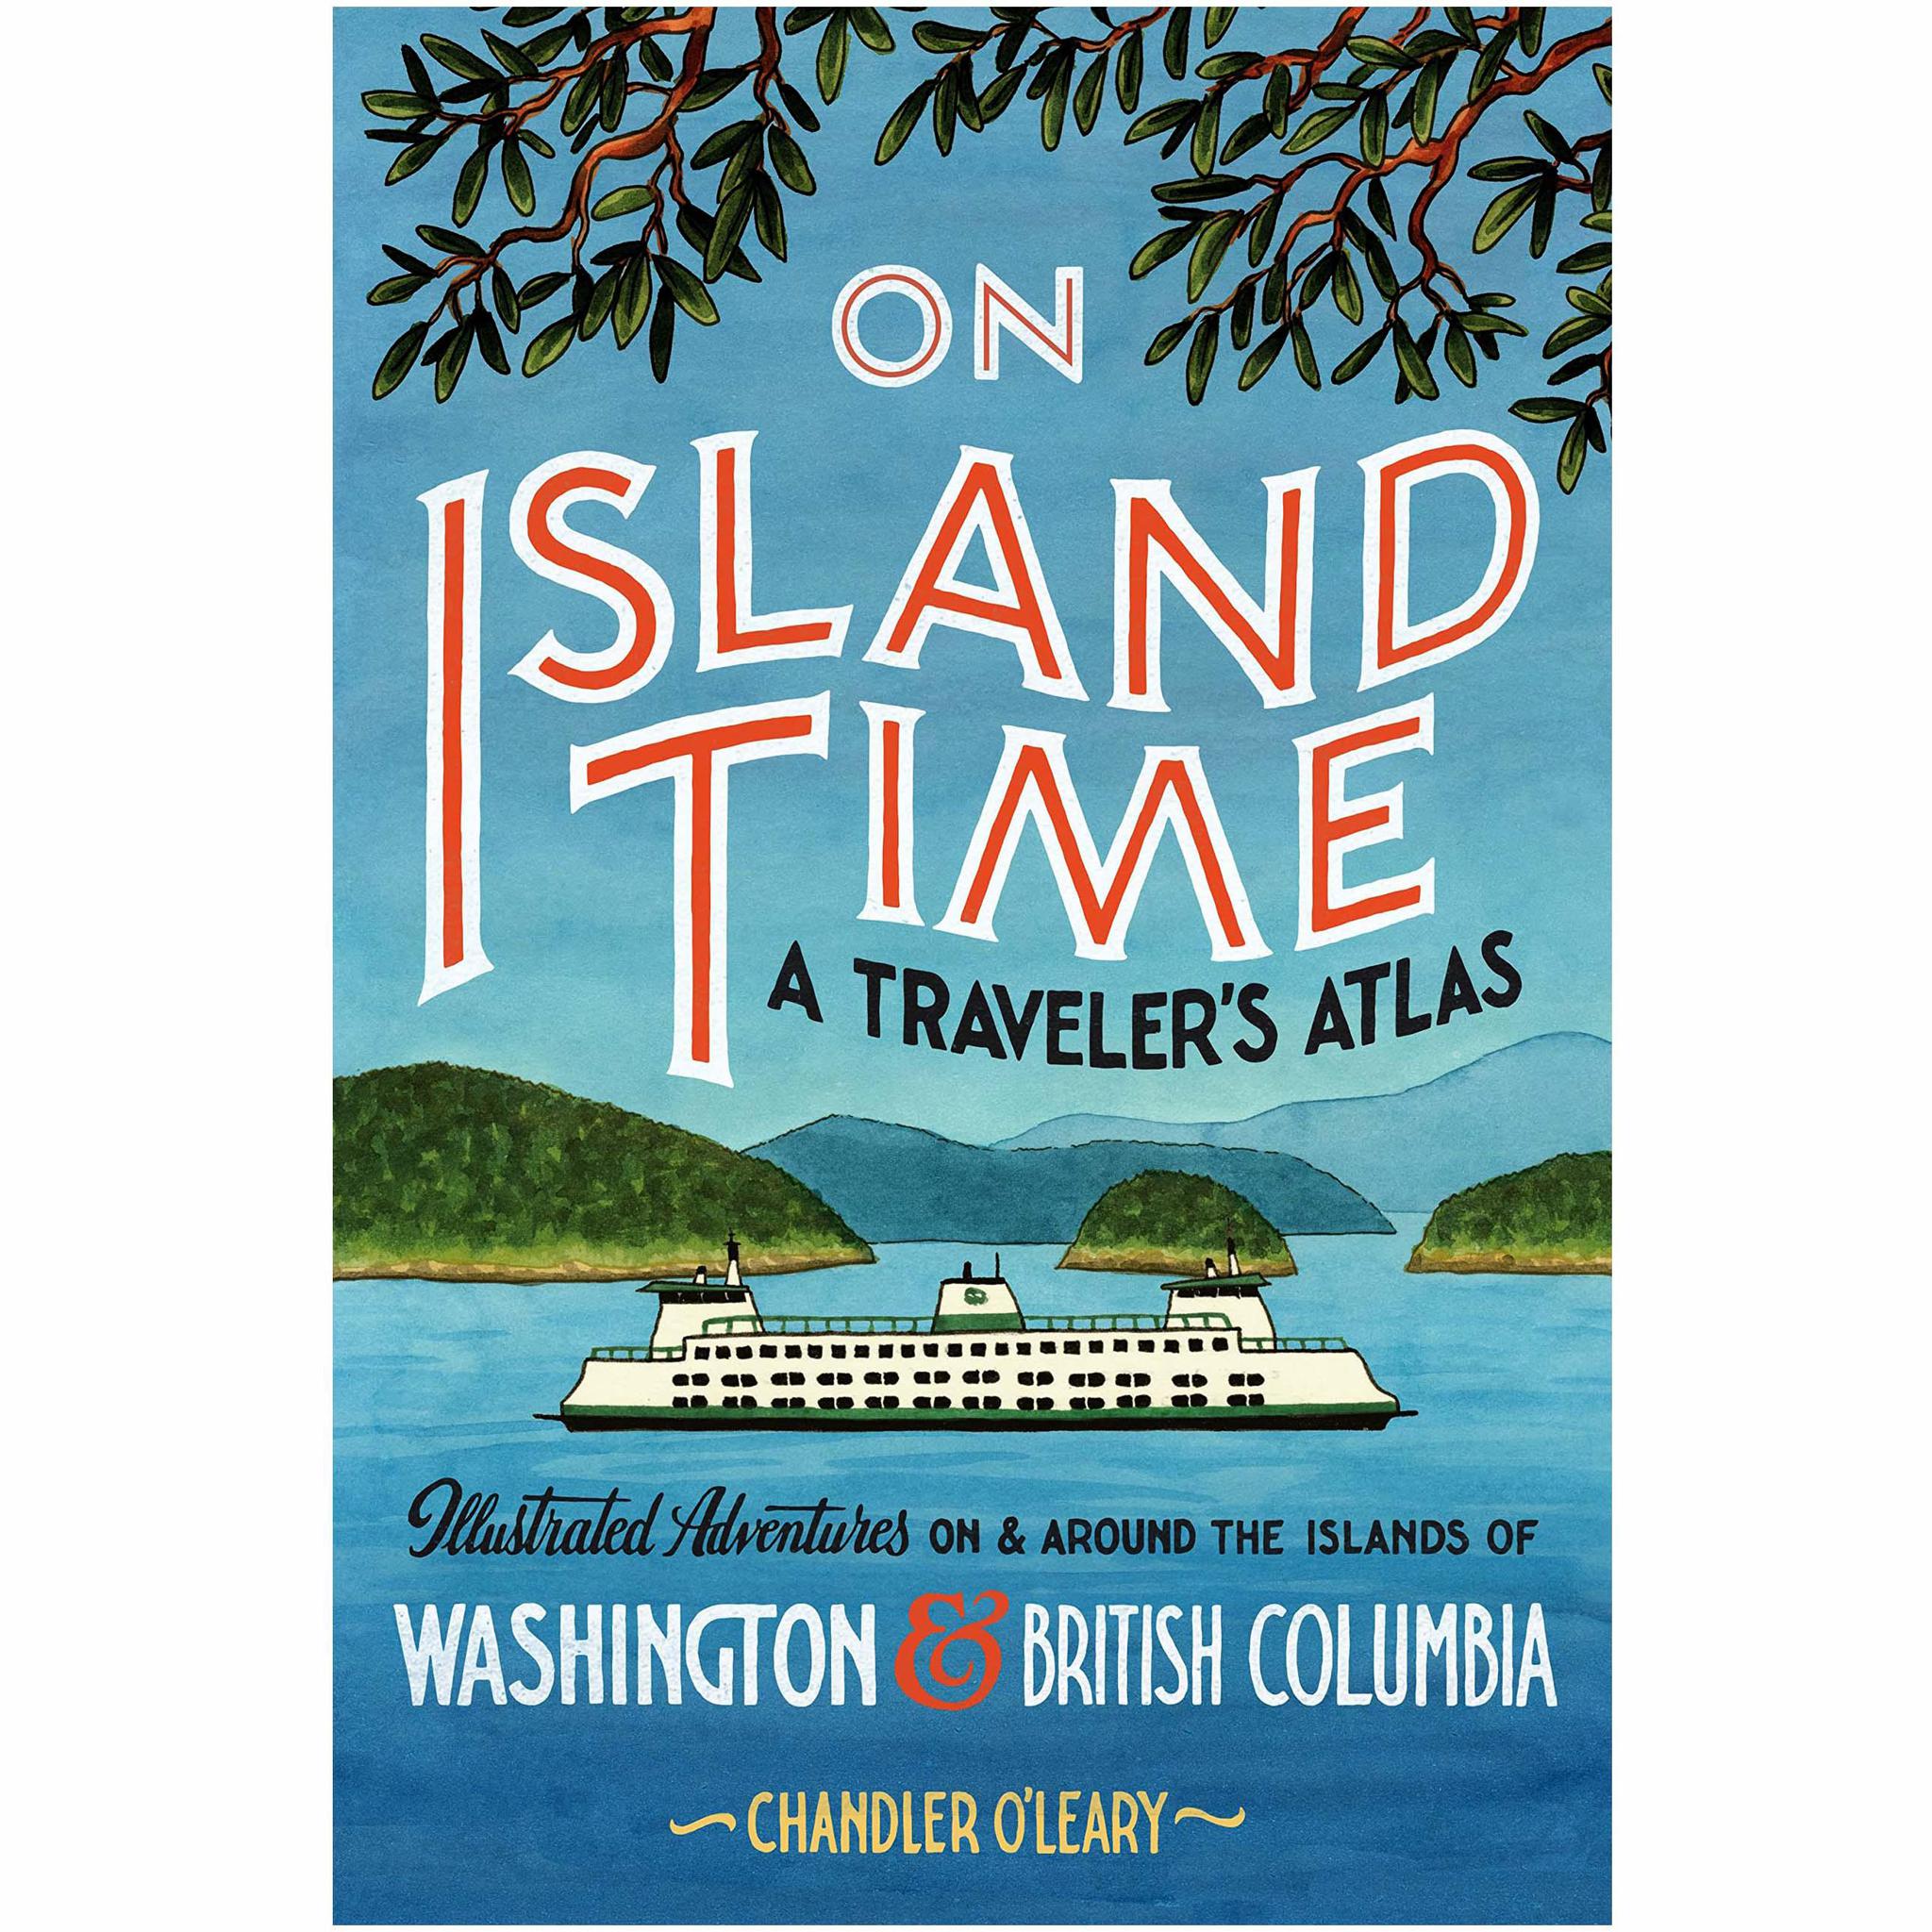 On Island Time - A Traveler's Atlas